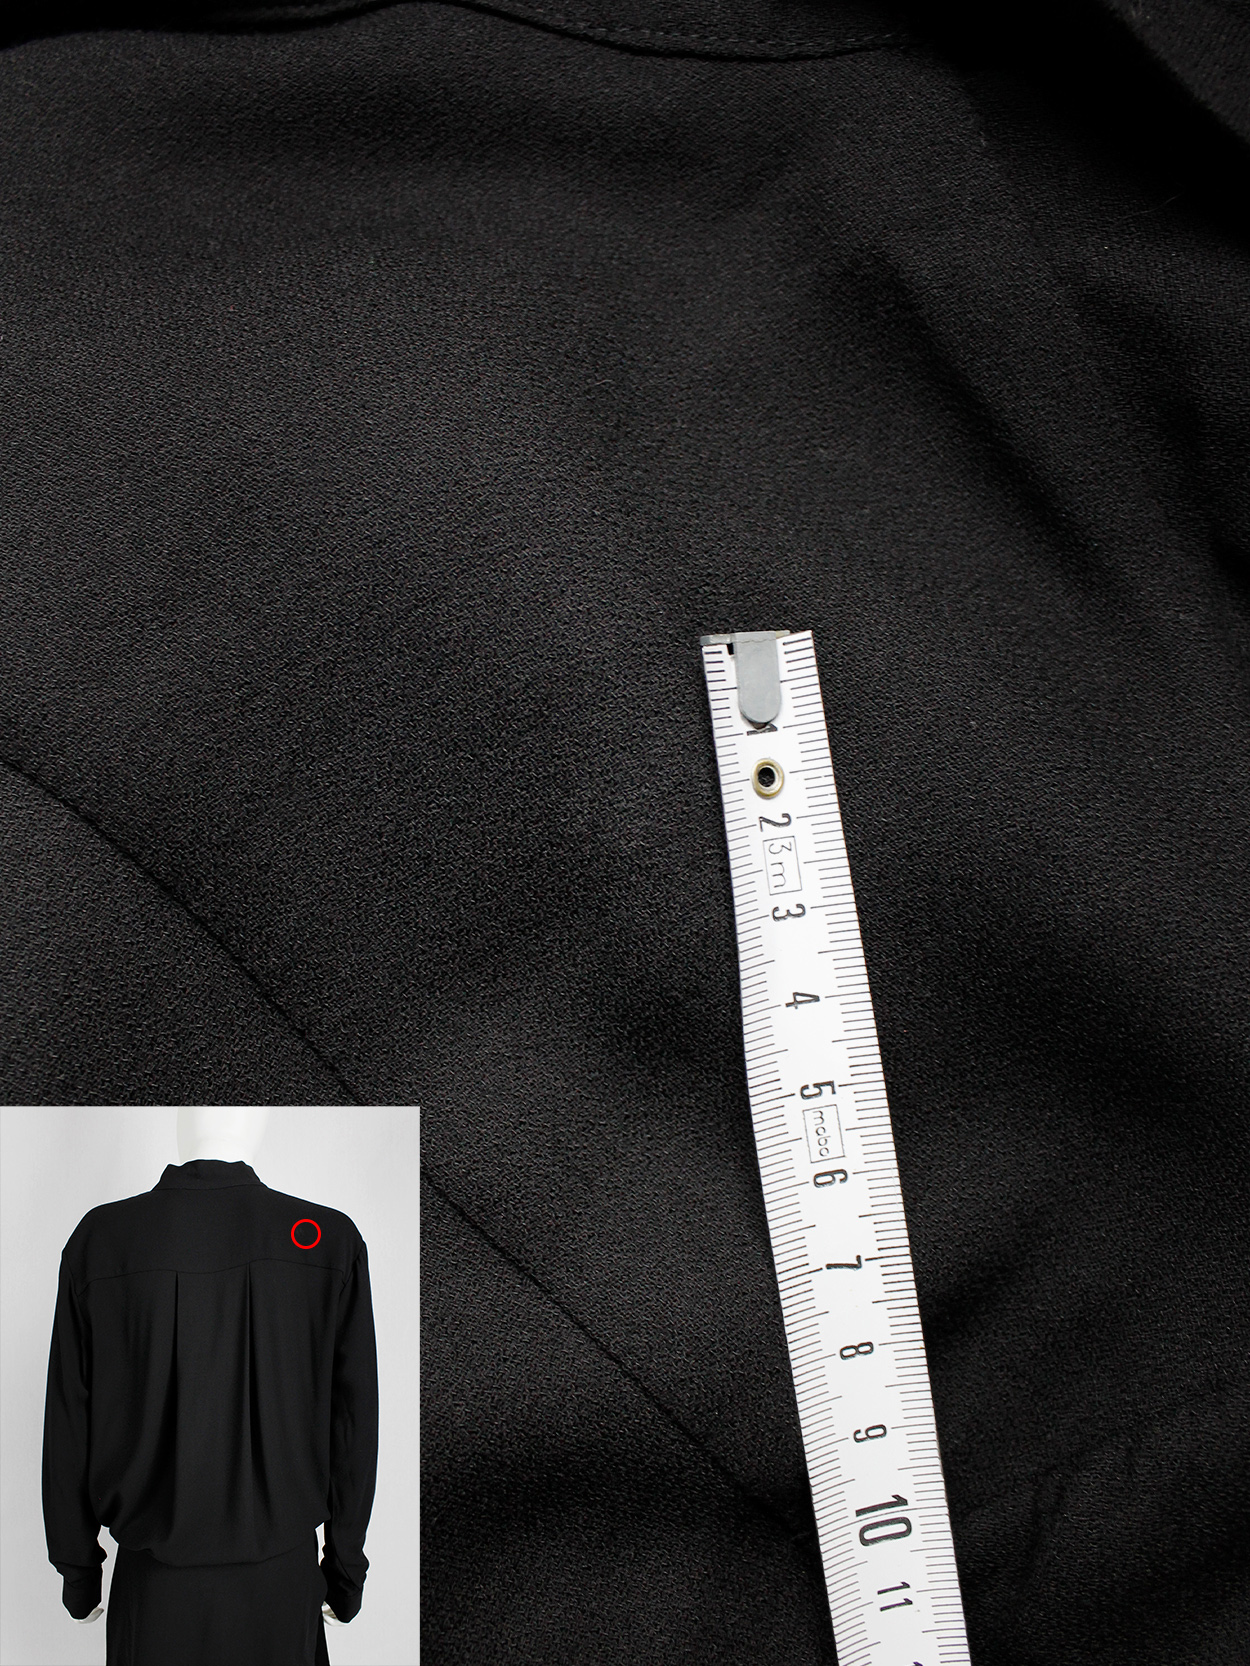 Haider Ackermann black dress with minimal neckline and bowtie fall 2015 (17)